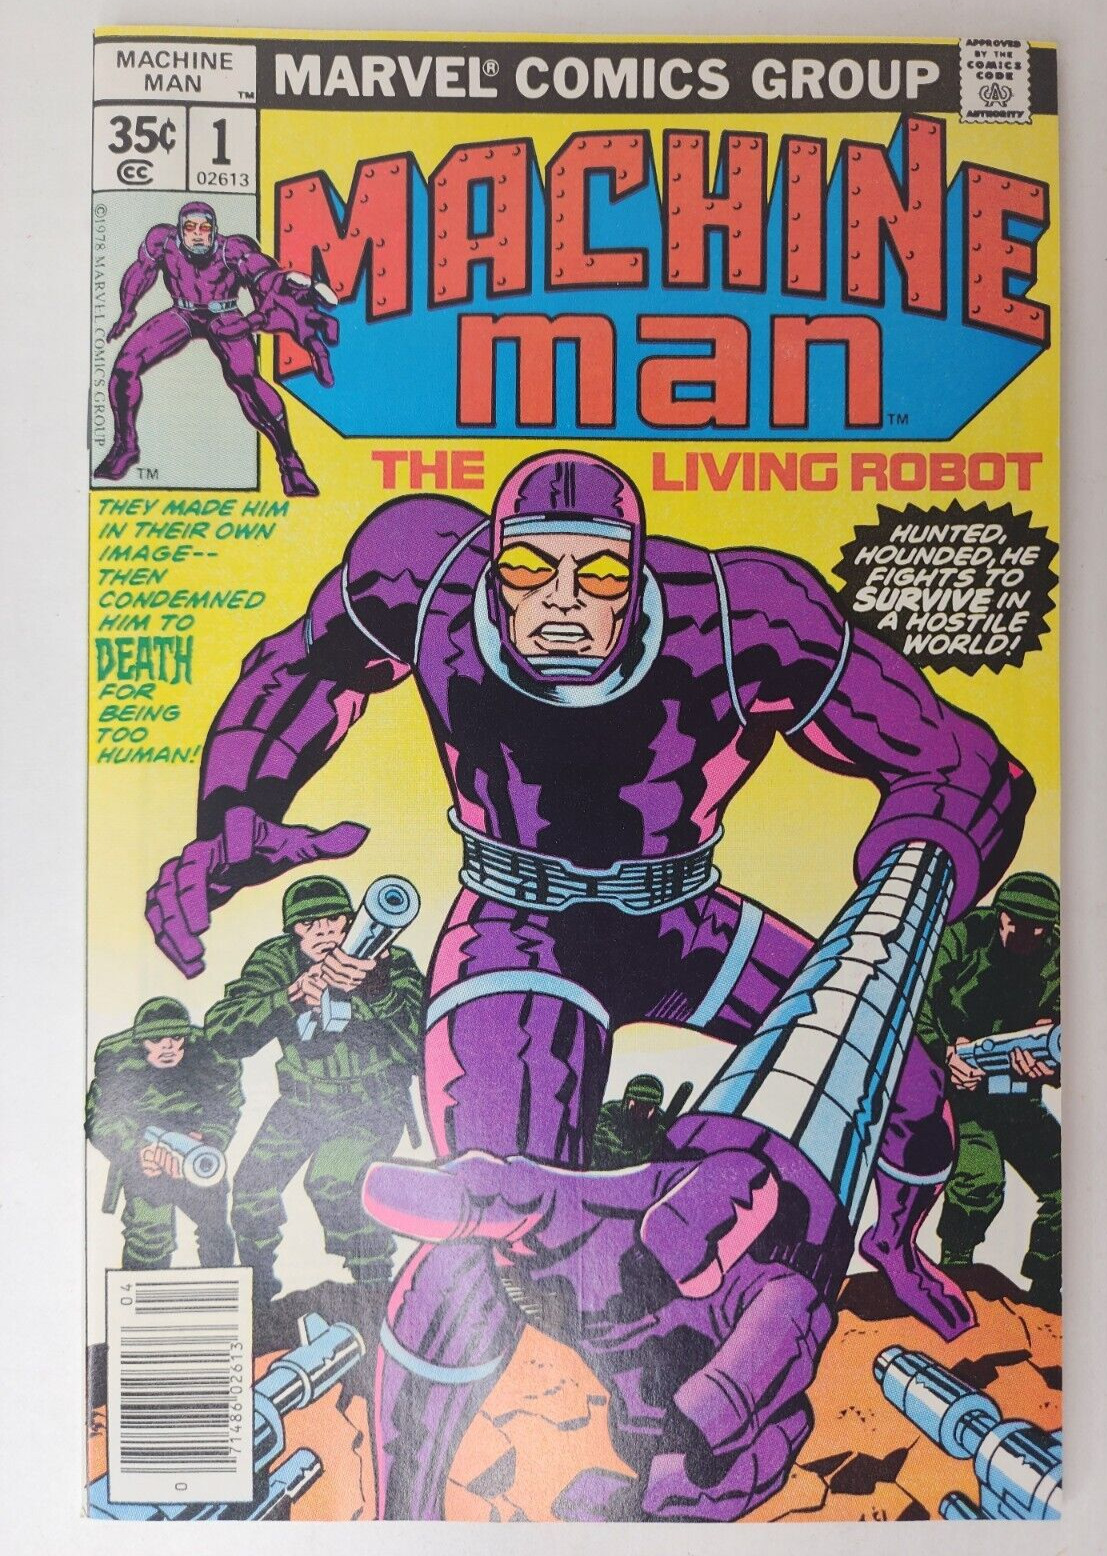 MACHINE MAN #1 THE LIVING ROBOT 1978 Vintage Marvel Comics Group